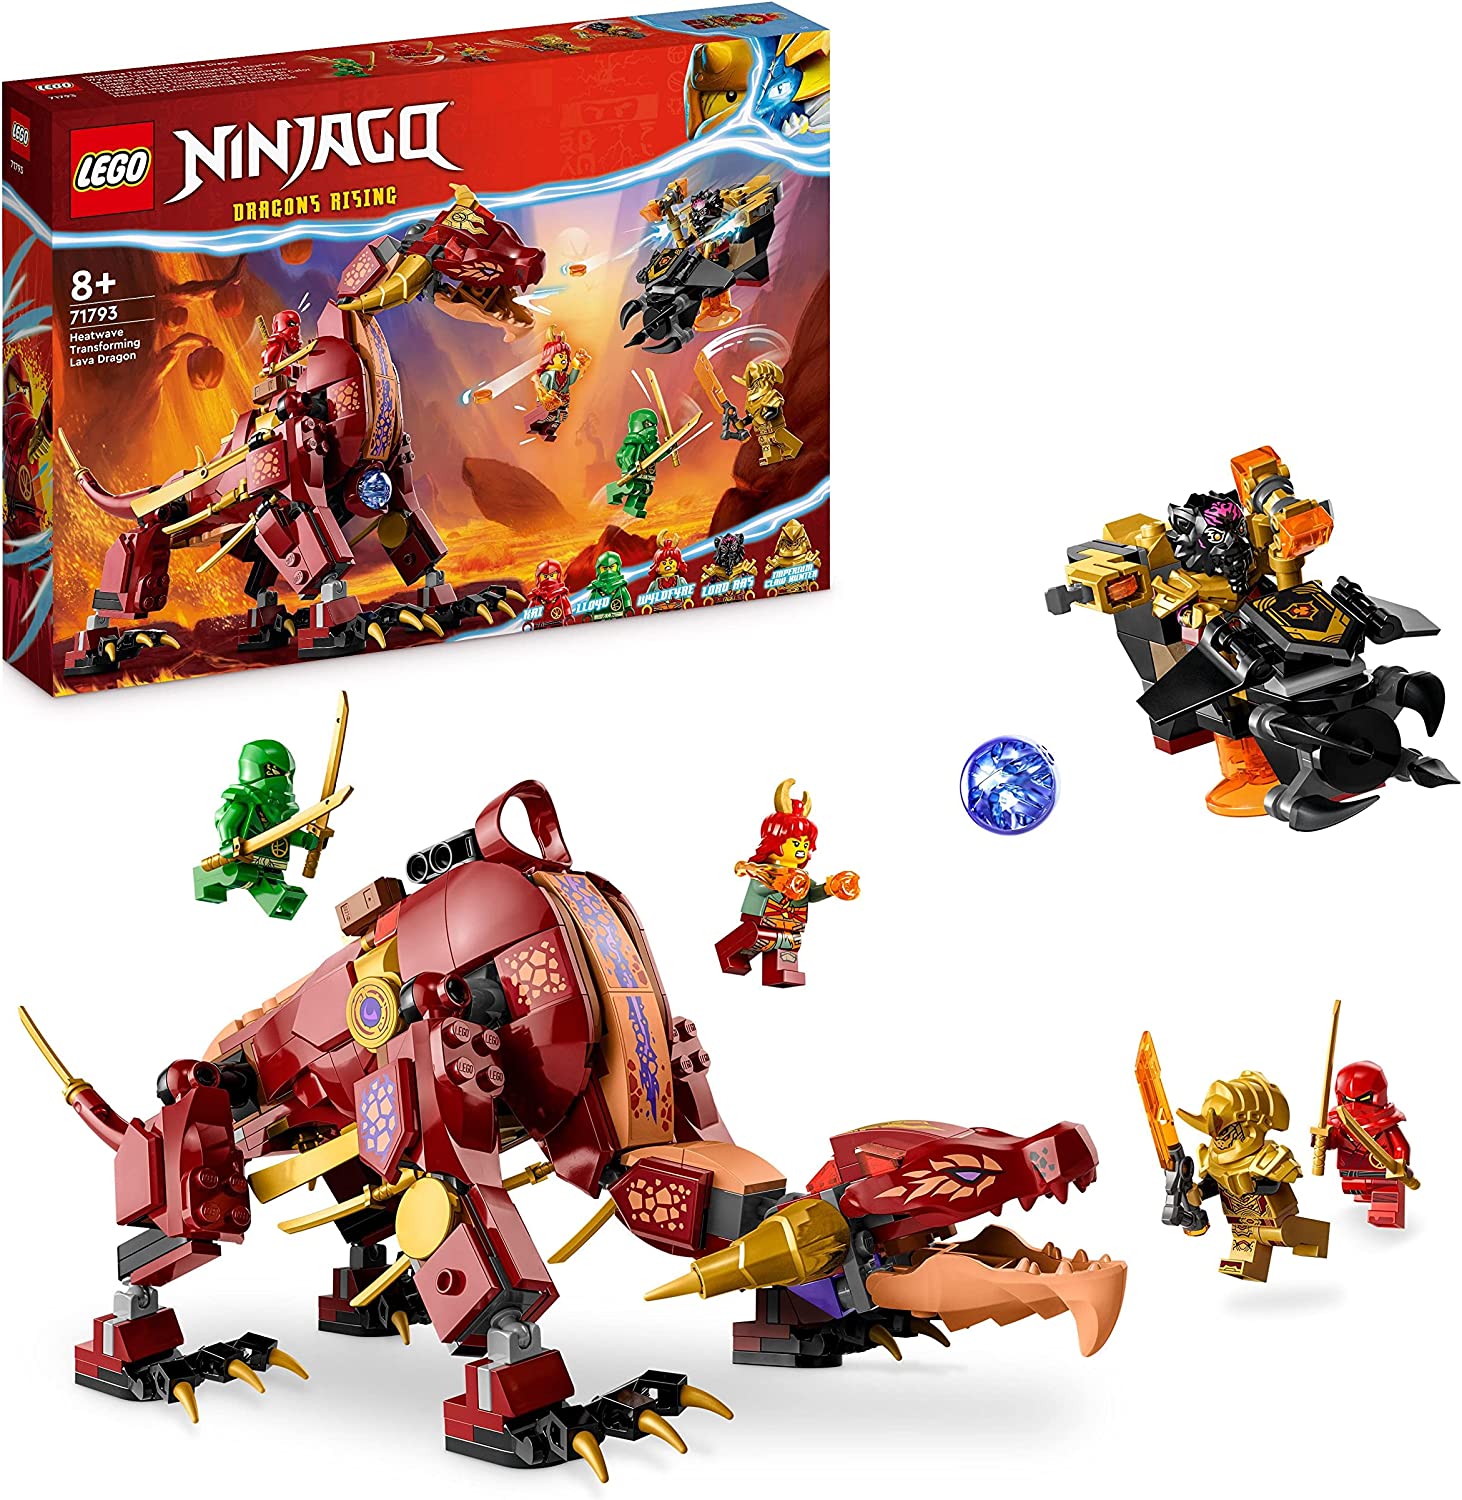 LEGO 71793 Ninjago Wyldfires Lava Dragon Mythical Creatures Transformable Toy, Dragon Series Set with a Dragon Figure and Kai & Lloyd Mini Figures